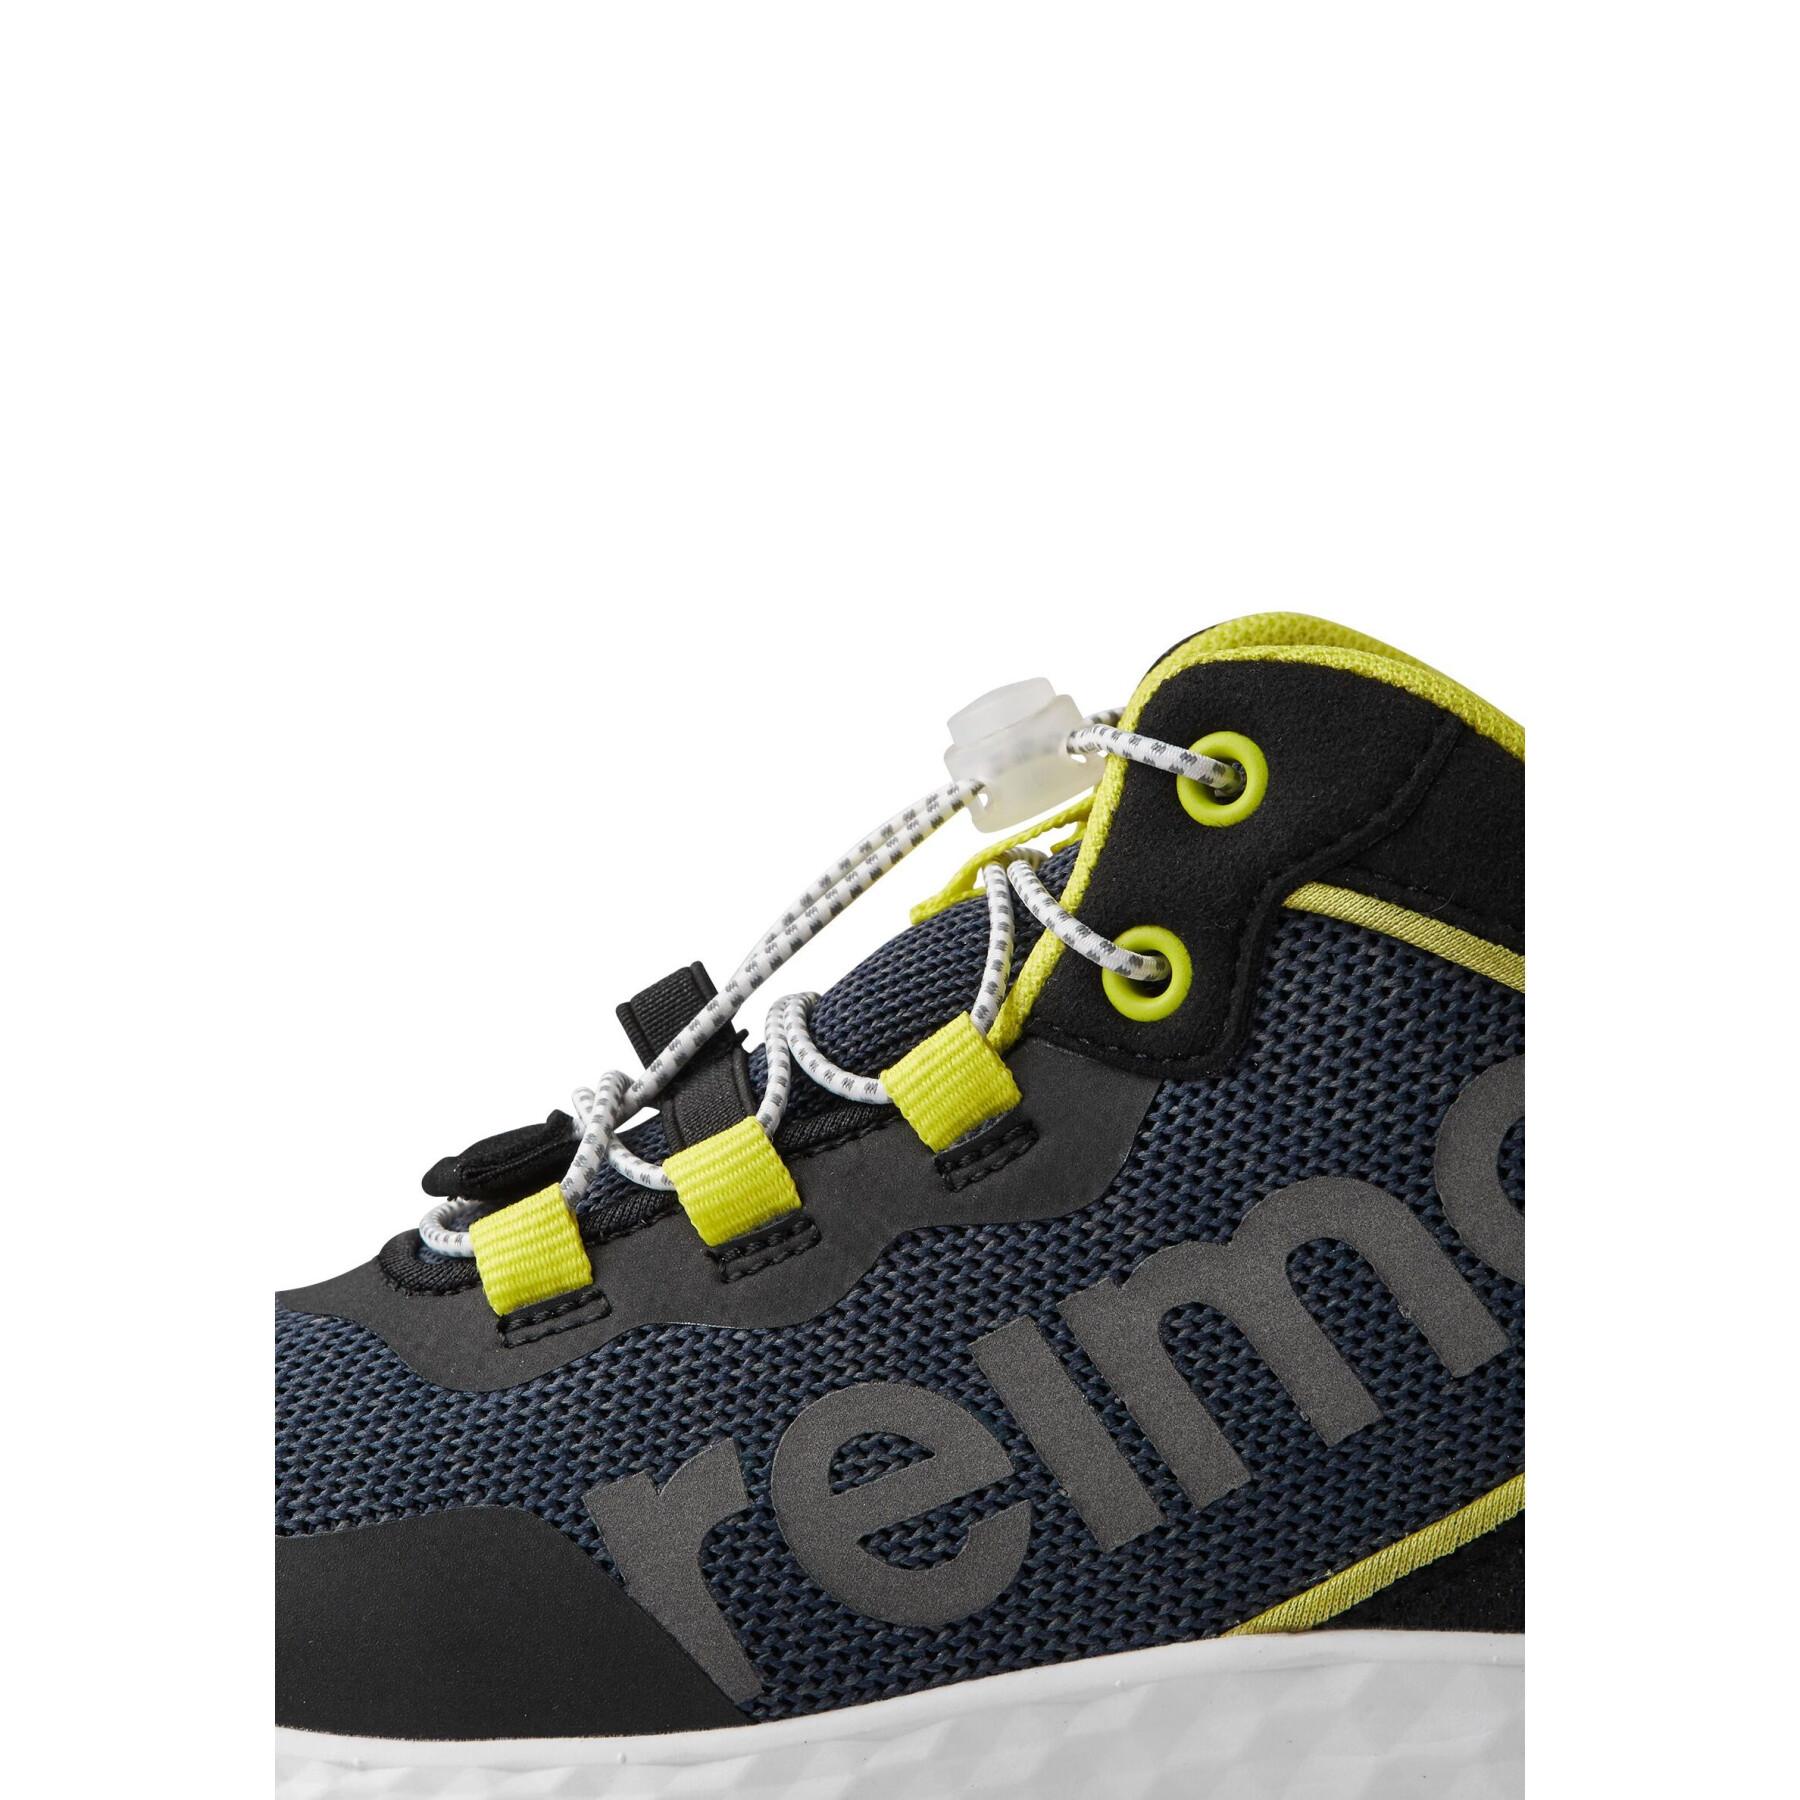 Children's sneakers Reima Reima tec Edistys